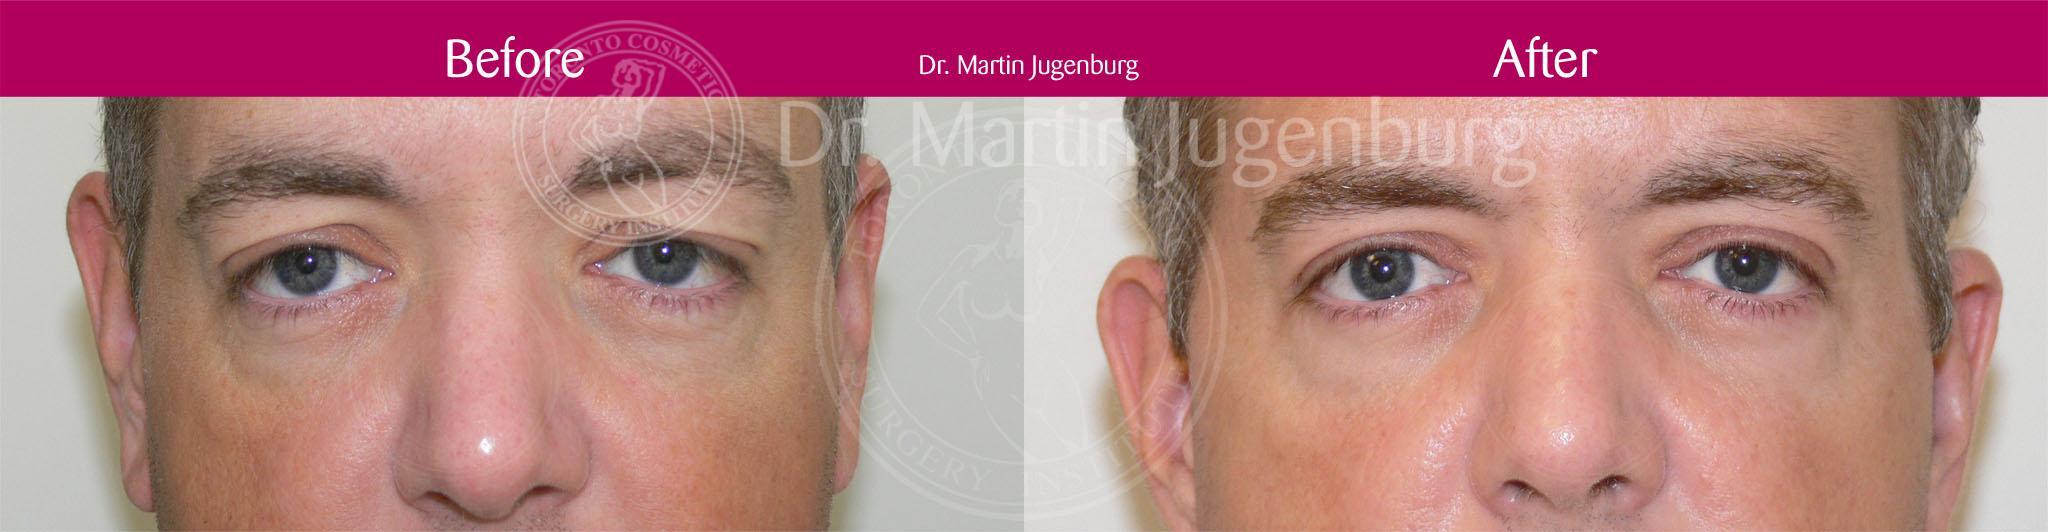 sixsurgery toronto blepharoplasty eyelid lift before and after